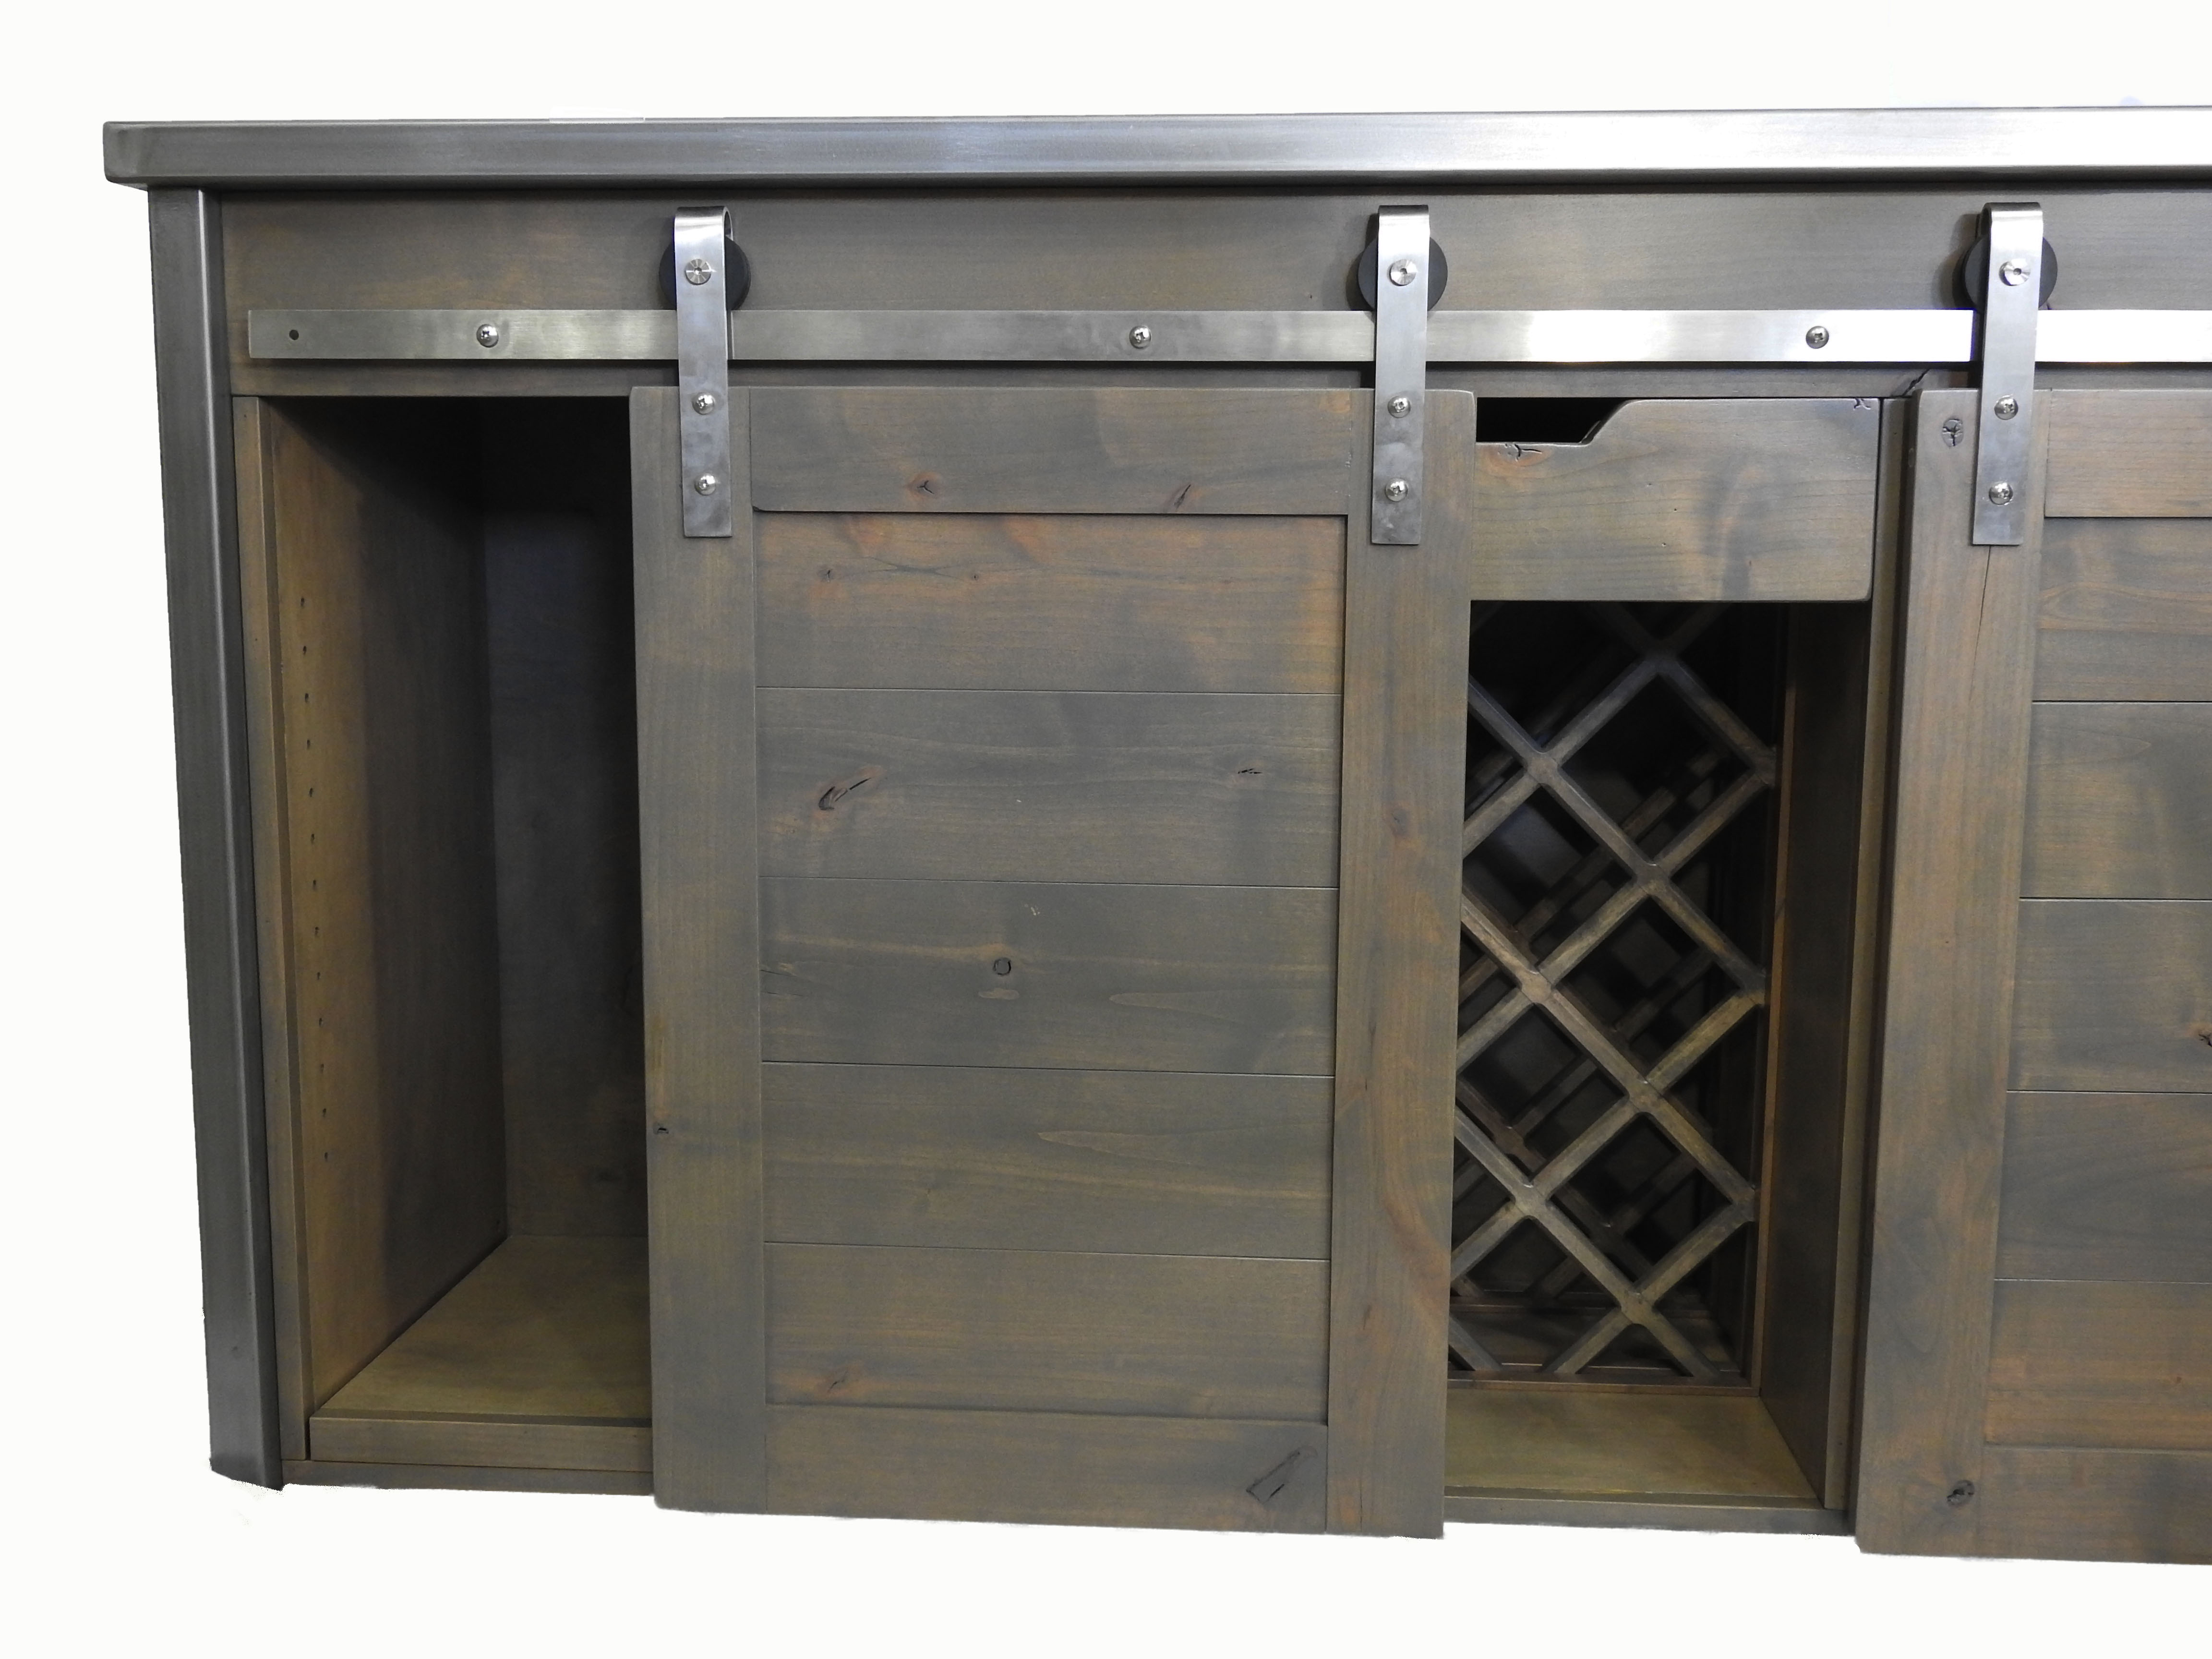 metal wine cabinet